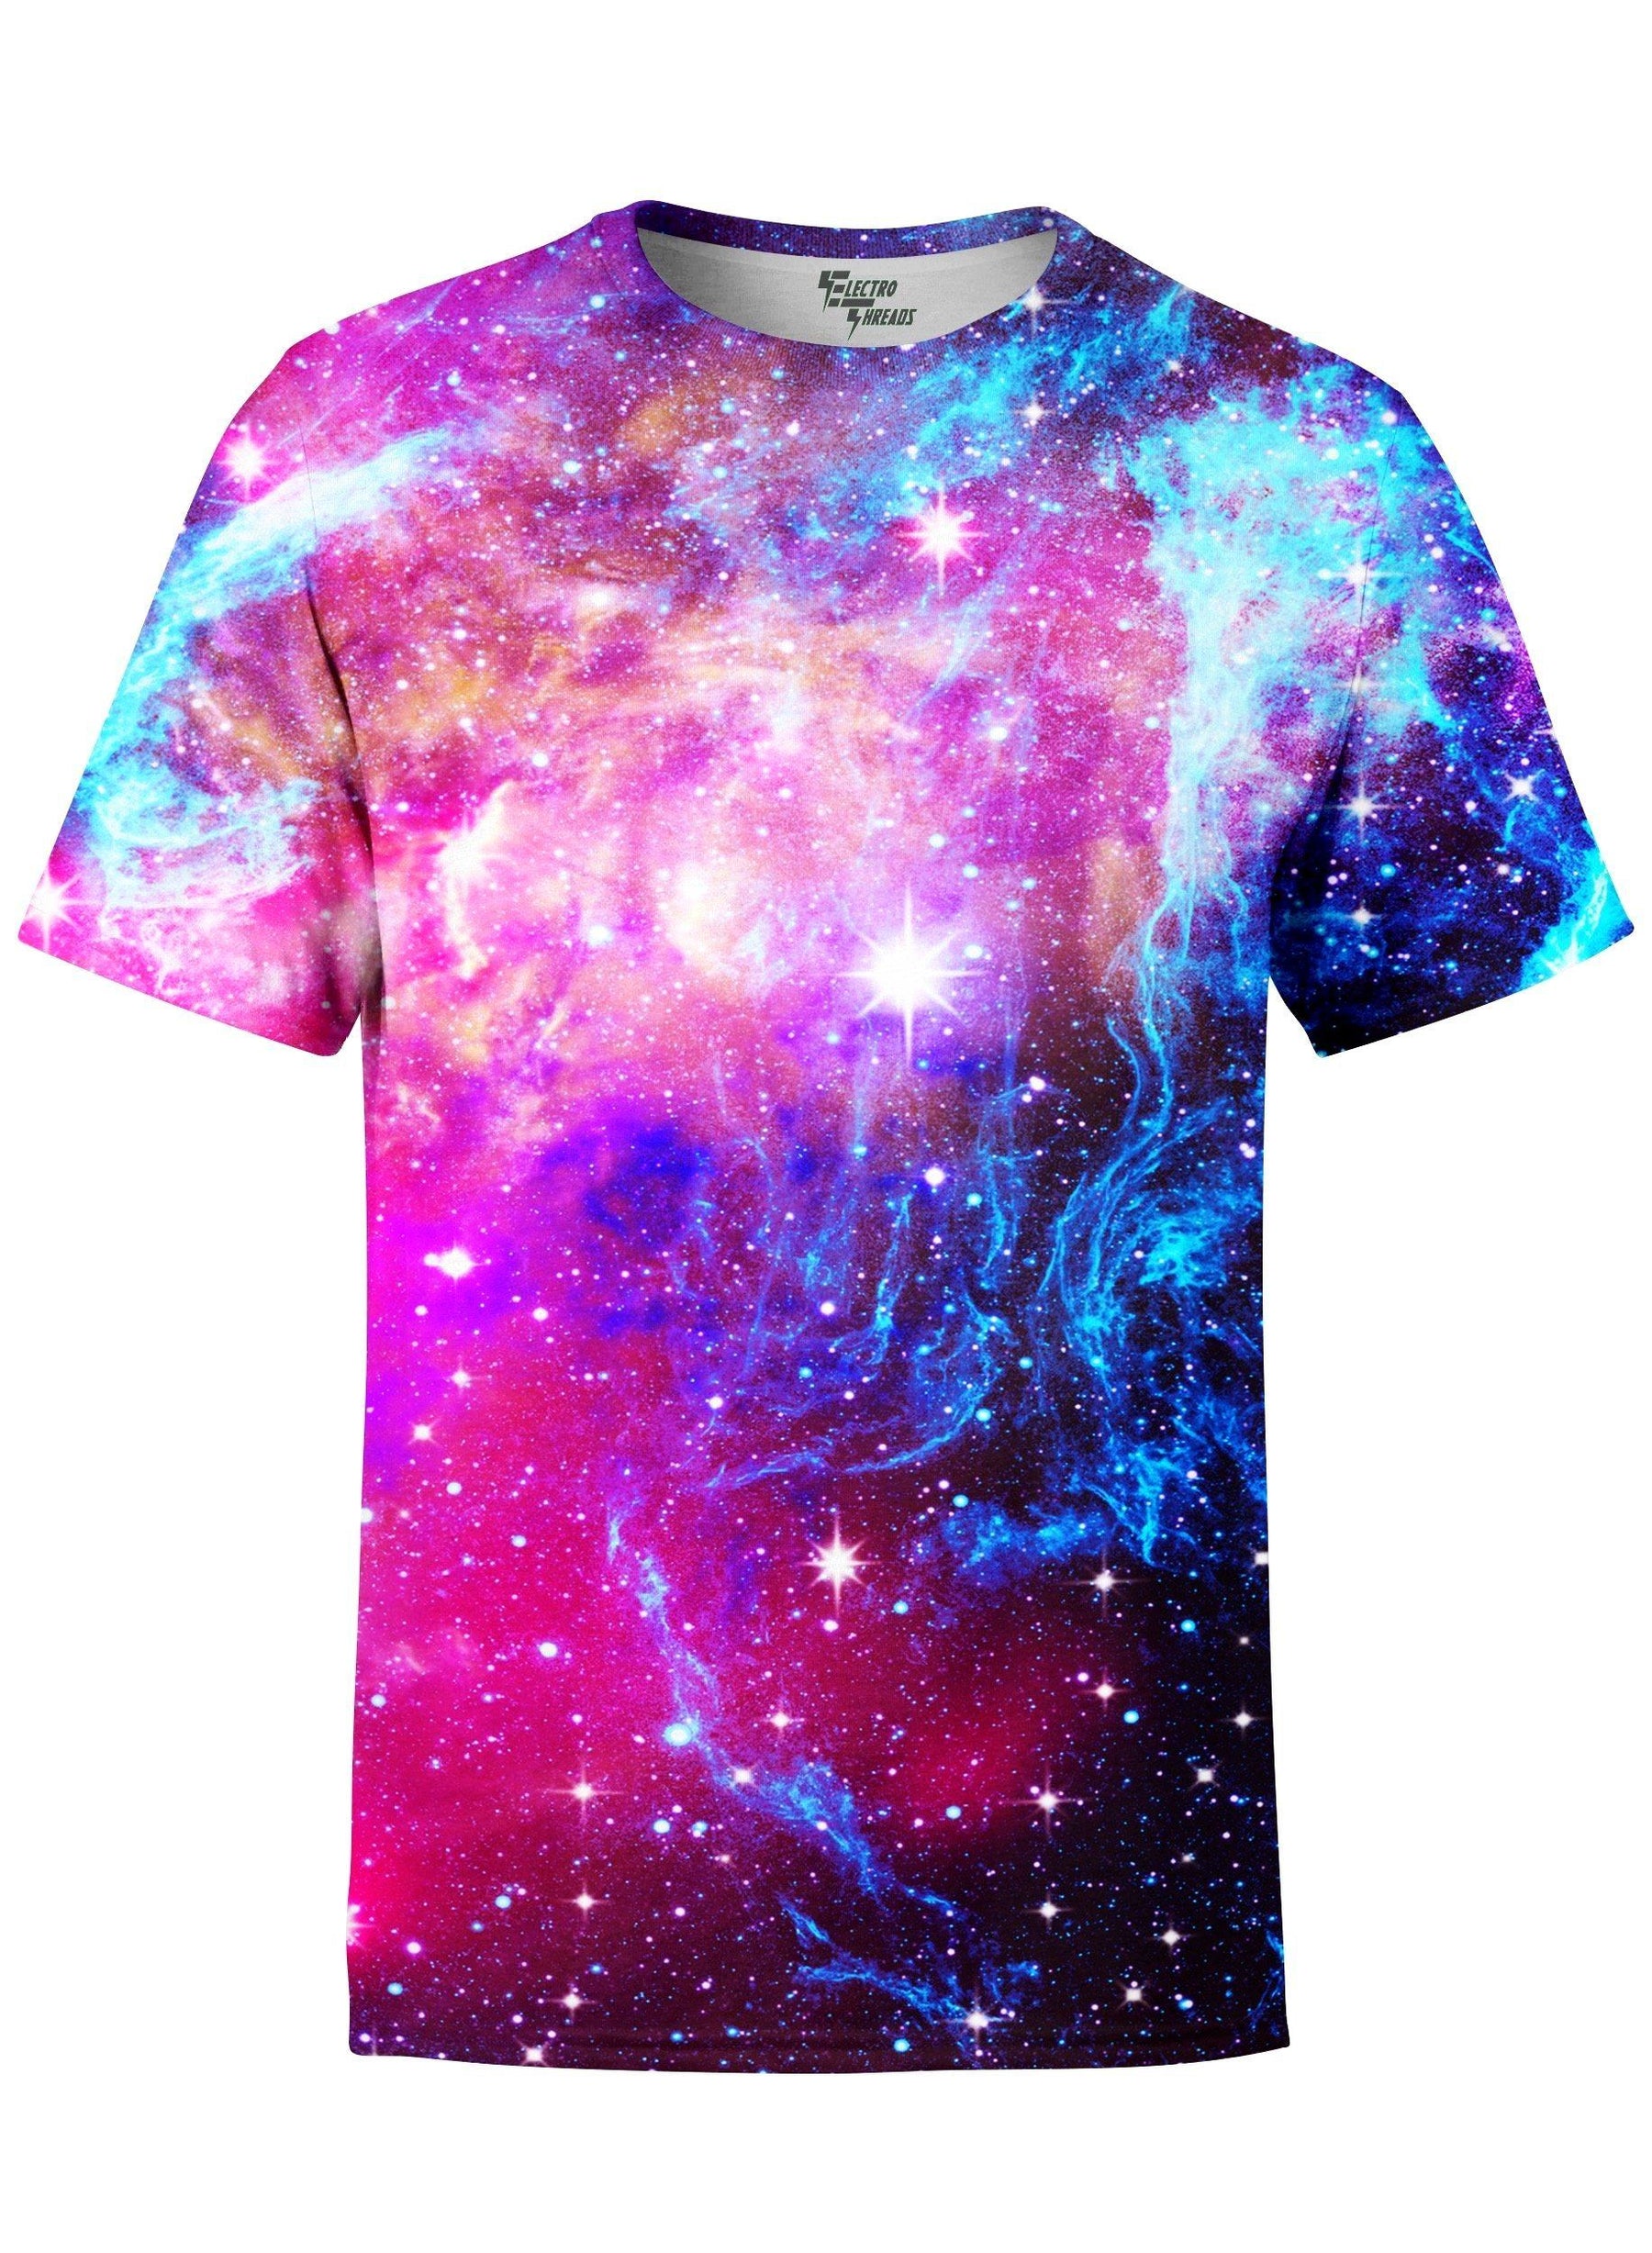 Galaxy Print Clothing | Shirts Hoodies Shorts - Electro Threads